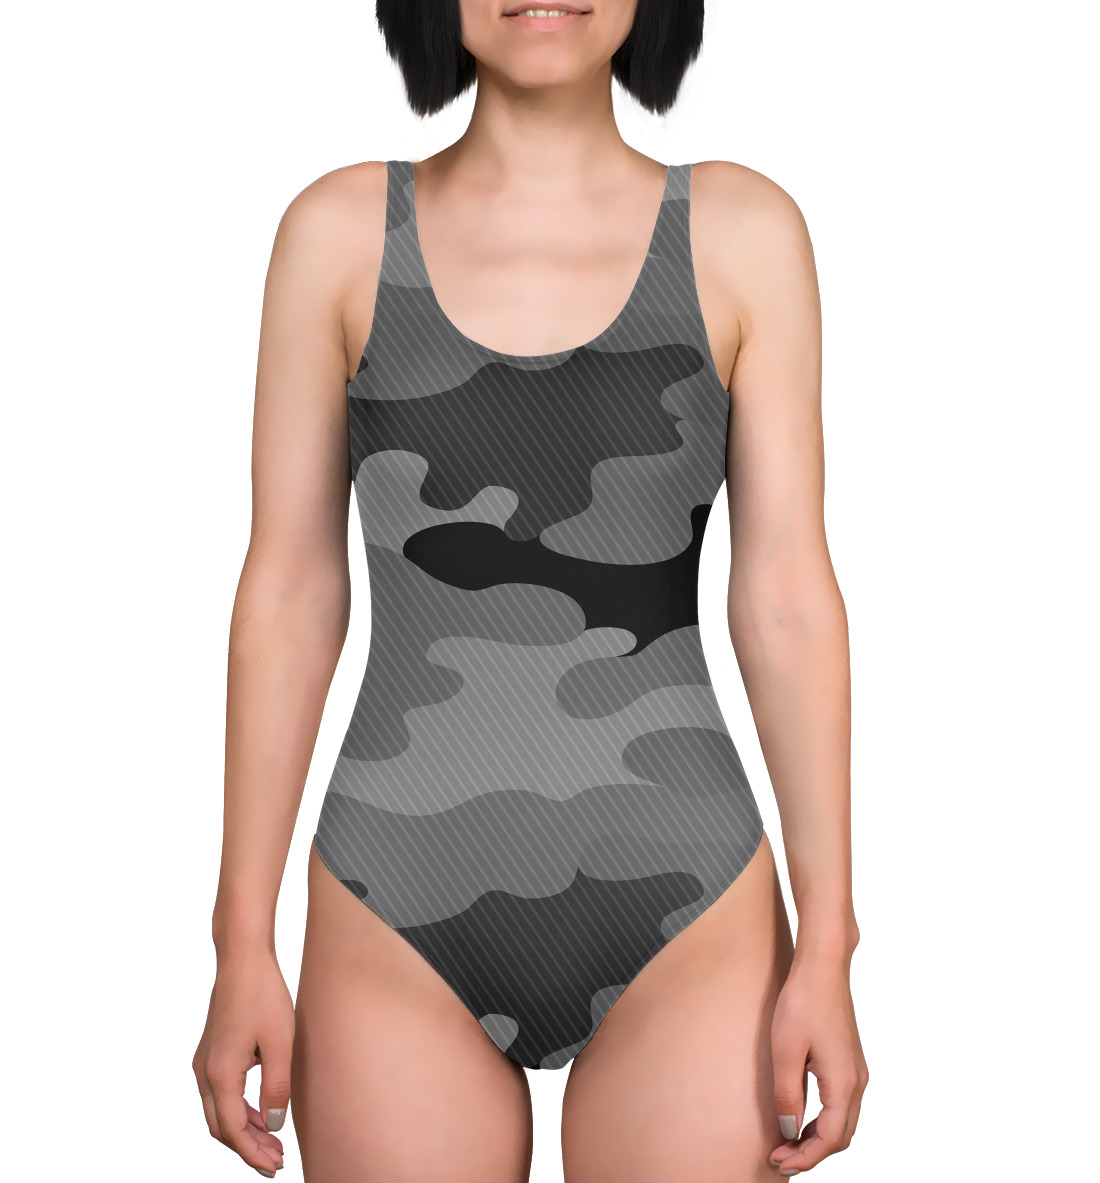 Купить Купальник-боди camouflage gray, артикул APD-131416-kub-1mp